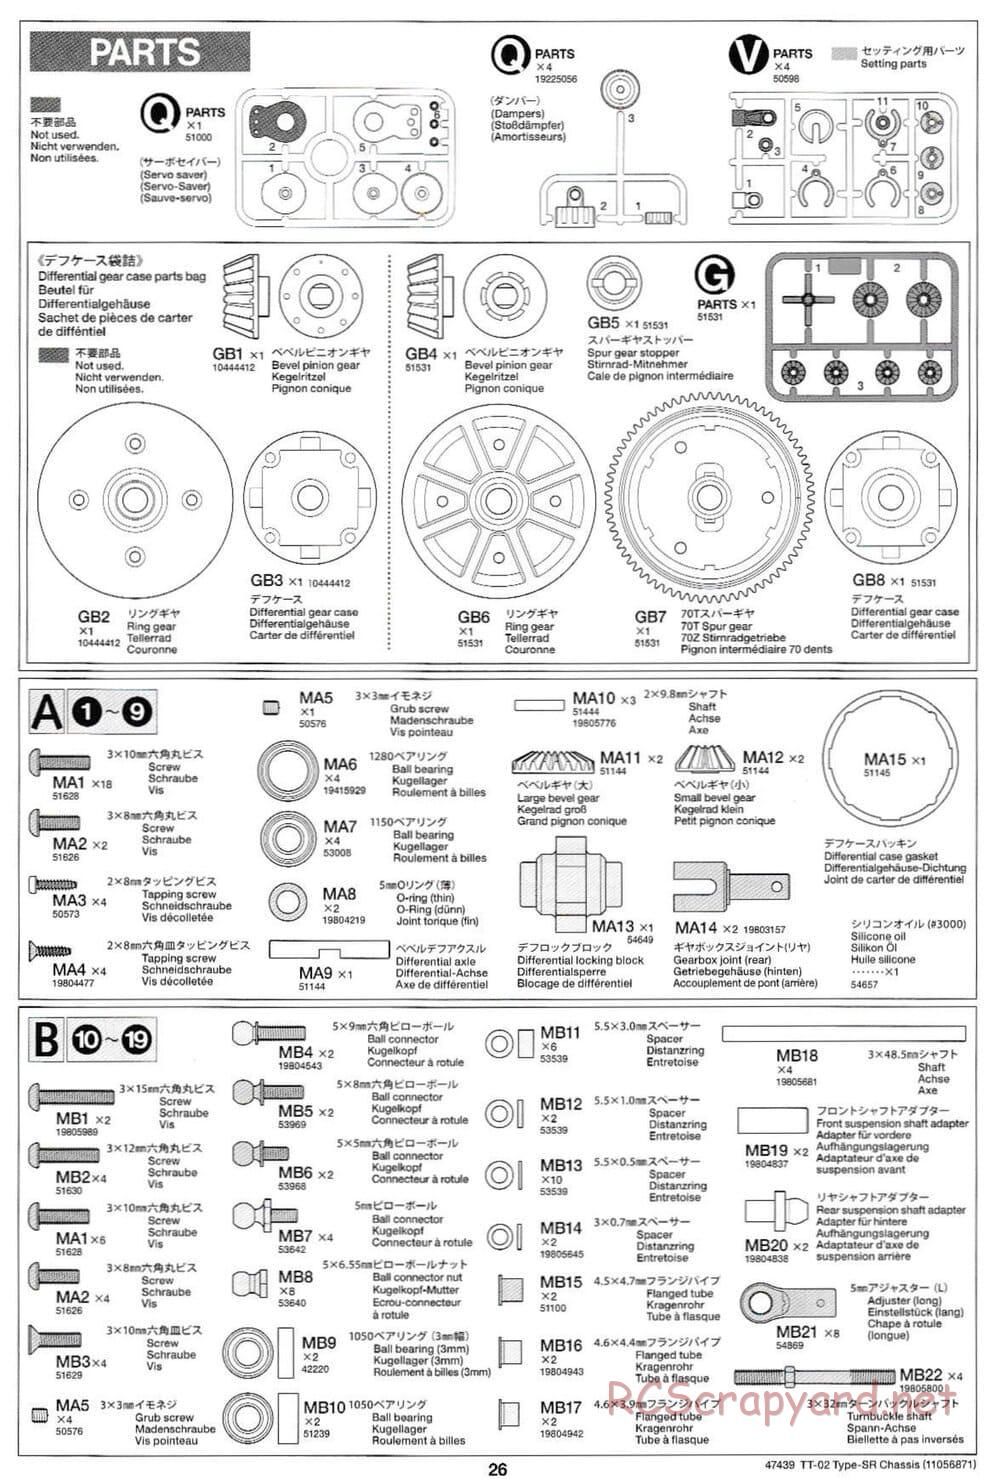 Tamiya - TT-02 Type-SR Chassis - Manual - Page 26